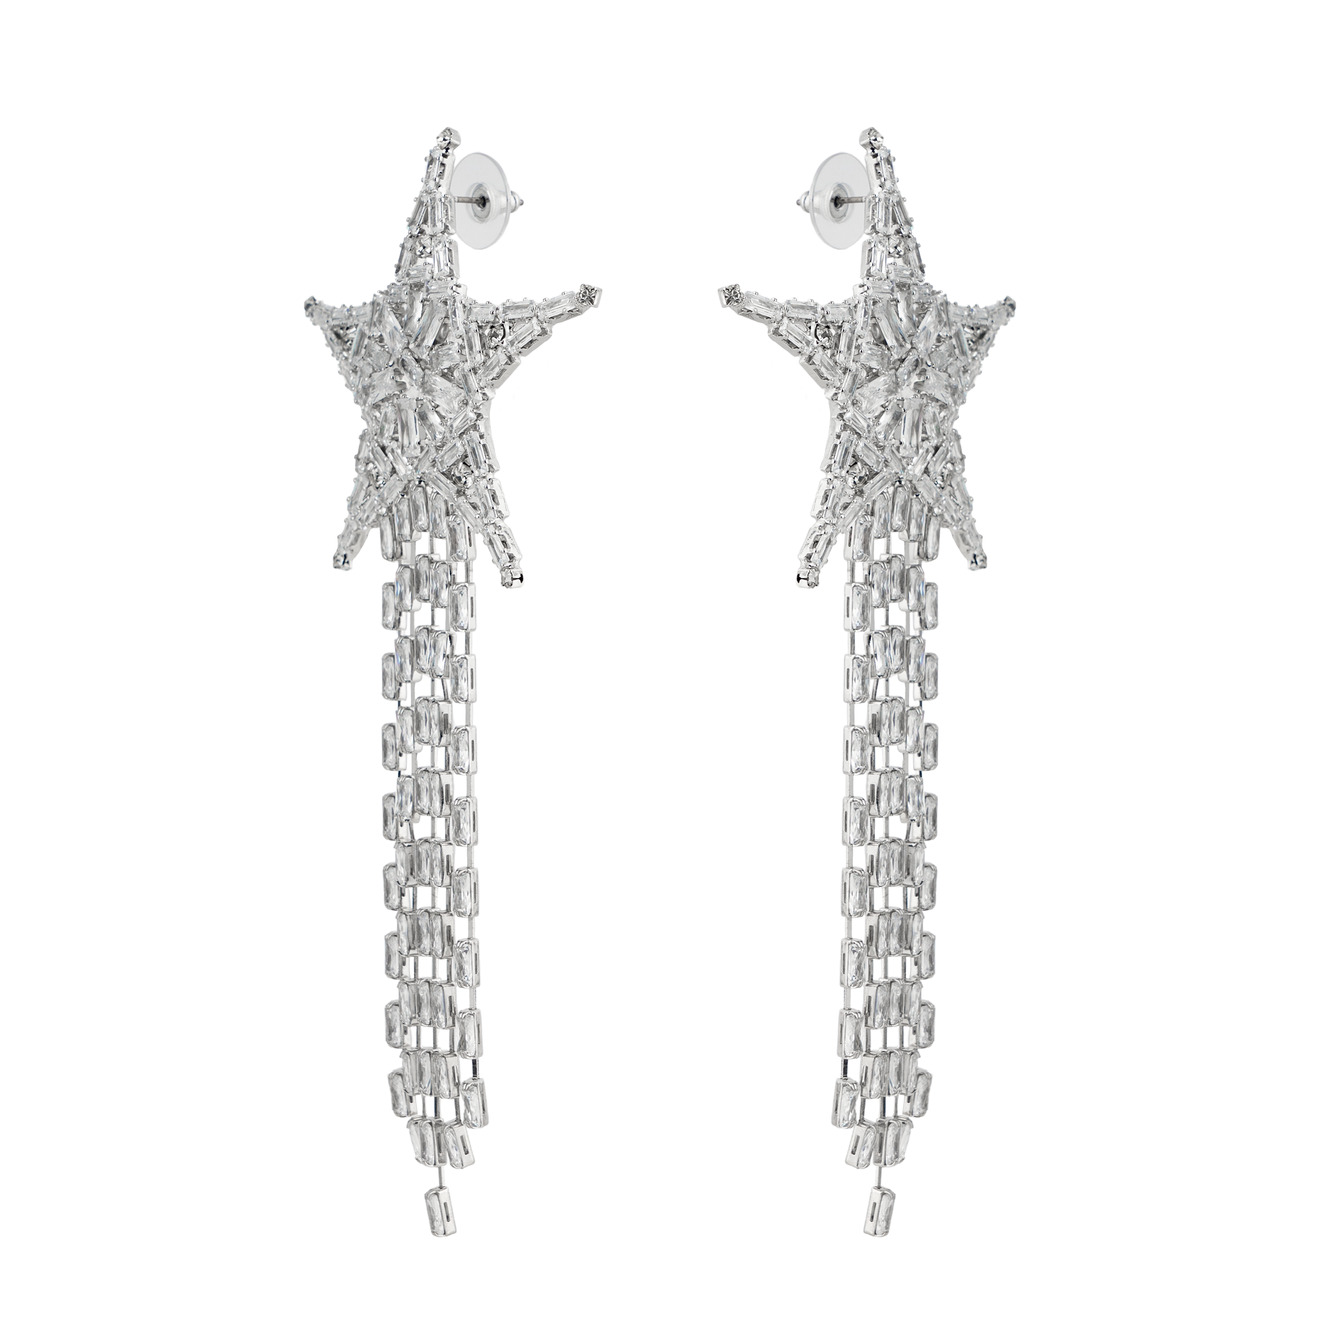 Herald Percy Серебристые бисерные серьги-звезды с кристаллами herald percy серебристые серьги звезды с кристаллами